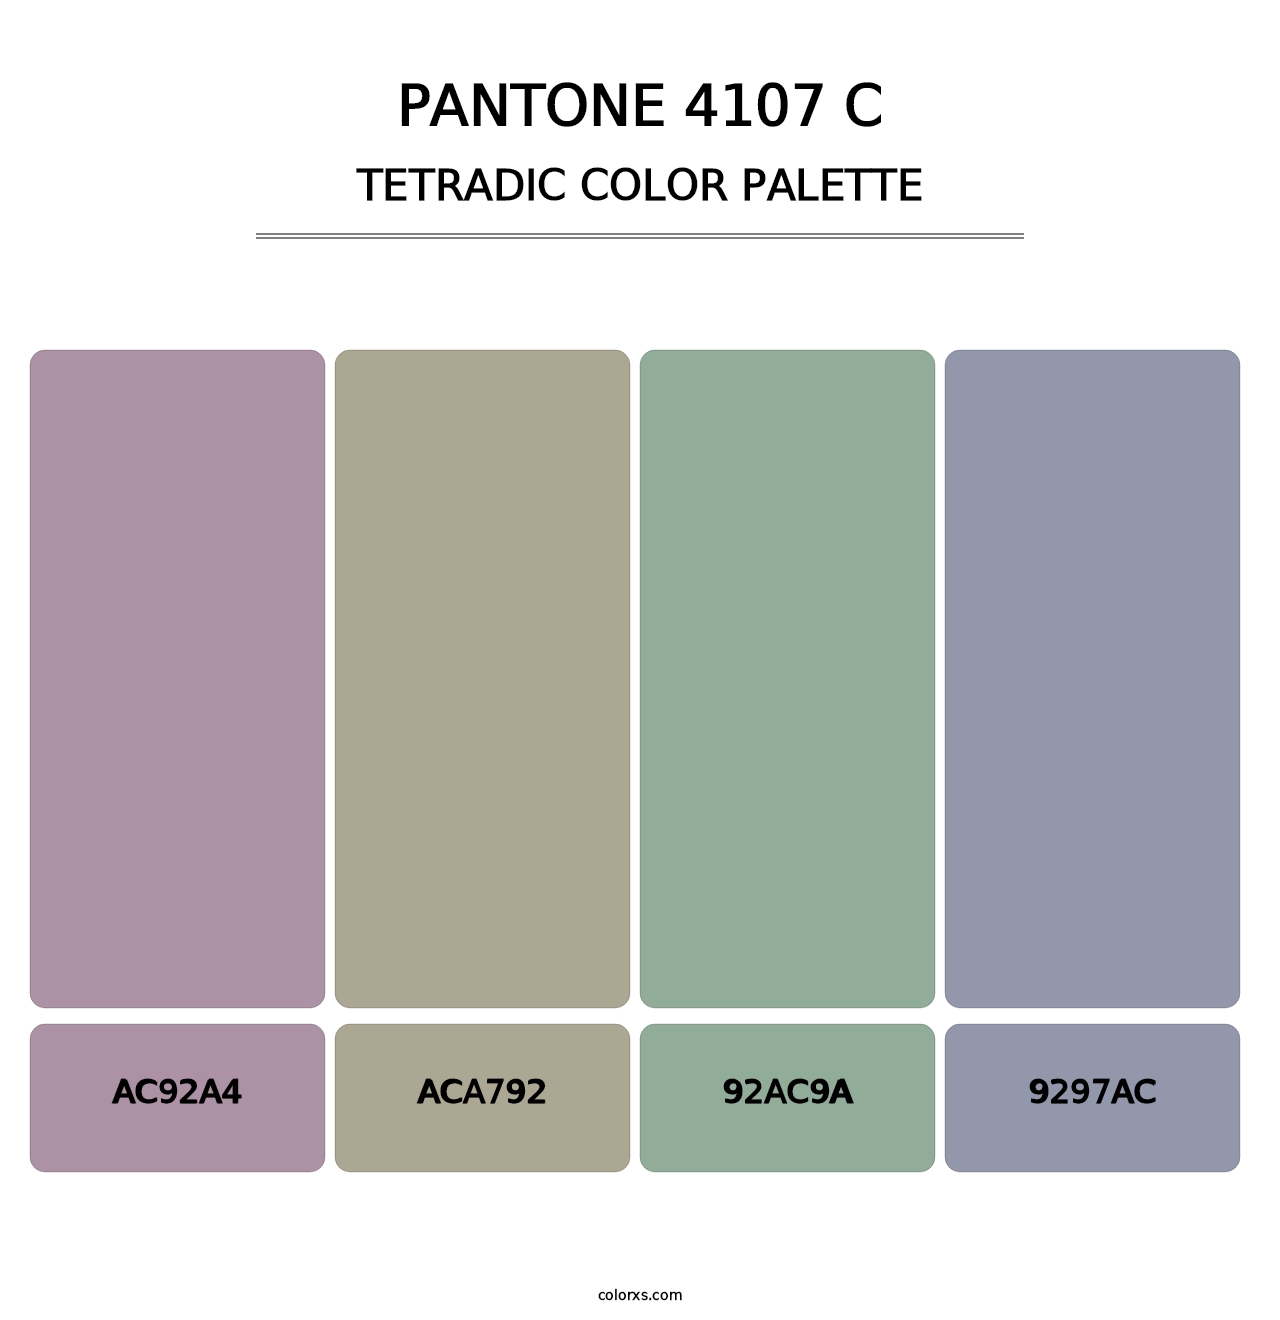 PANTONE 4107 C - Tetradic Color Palette